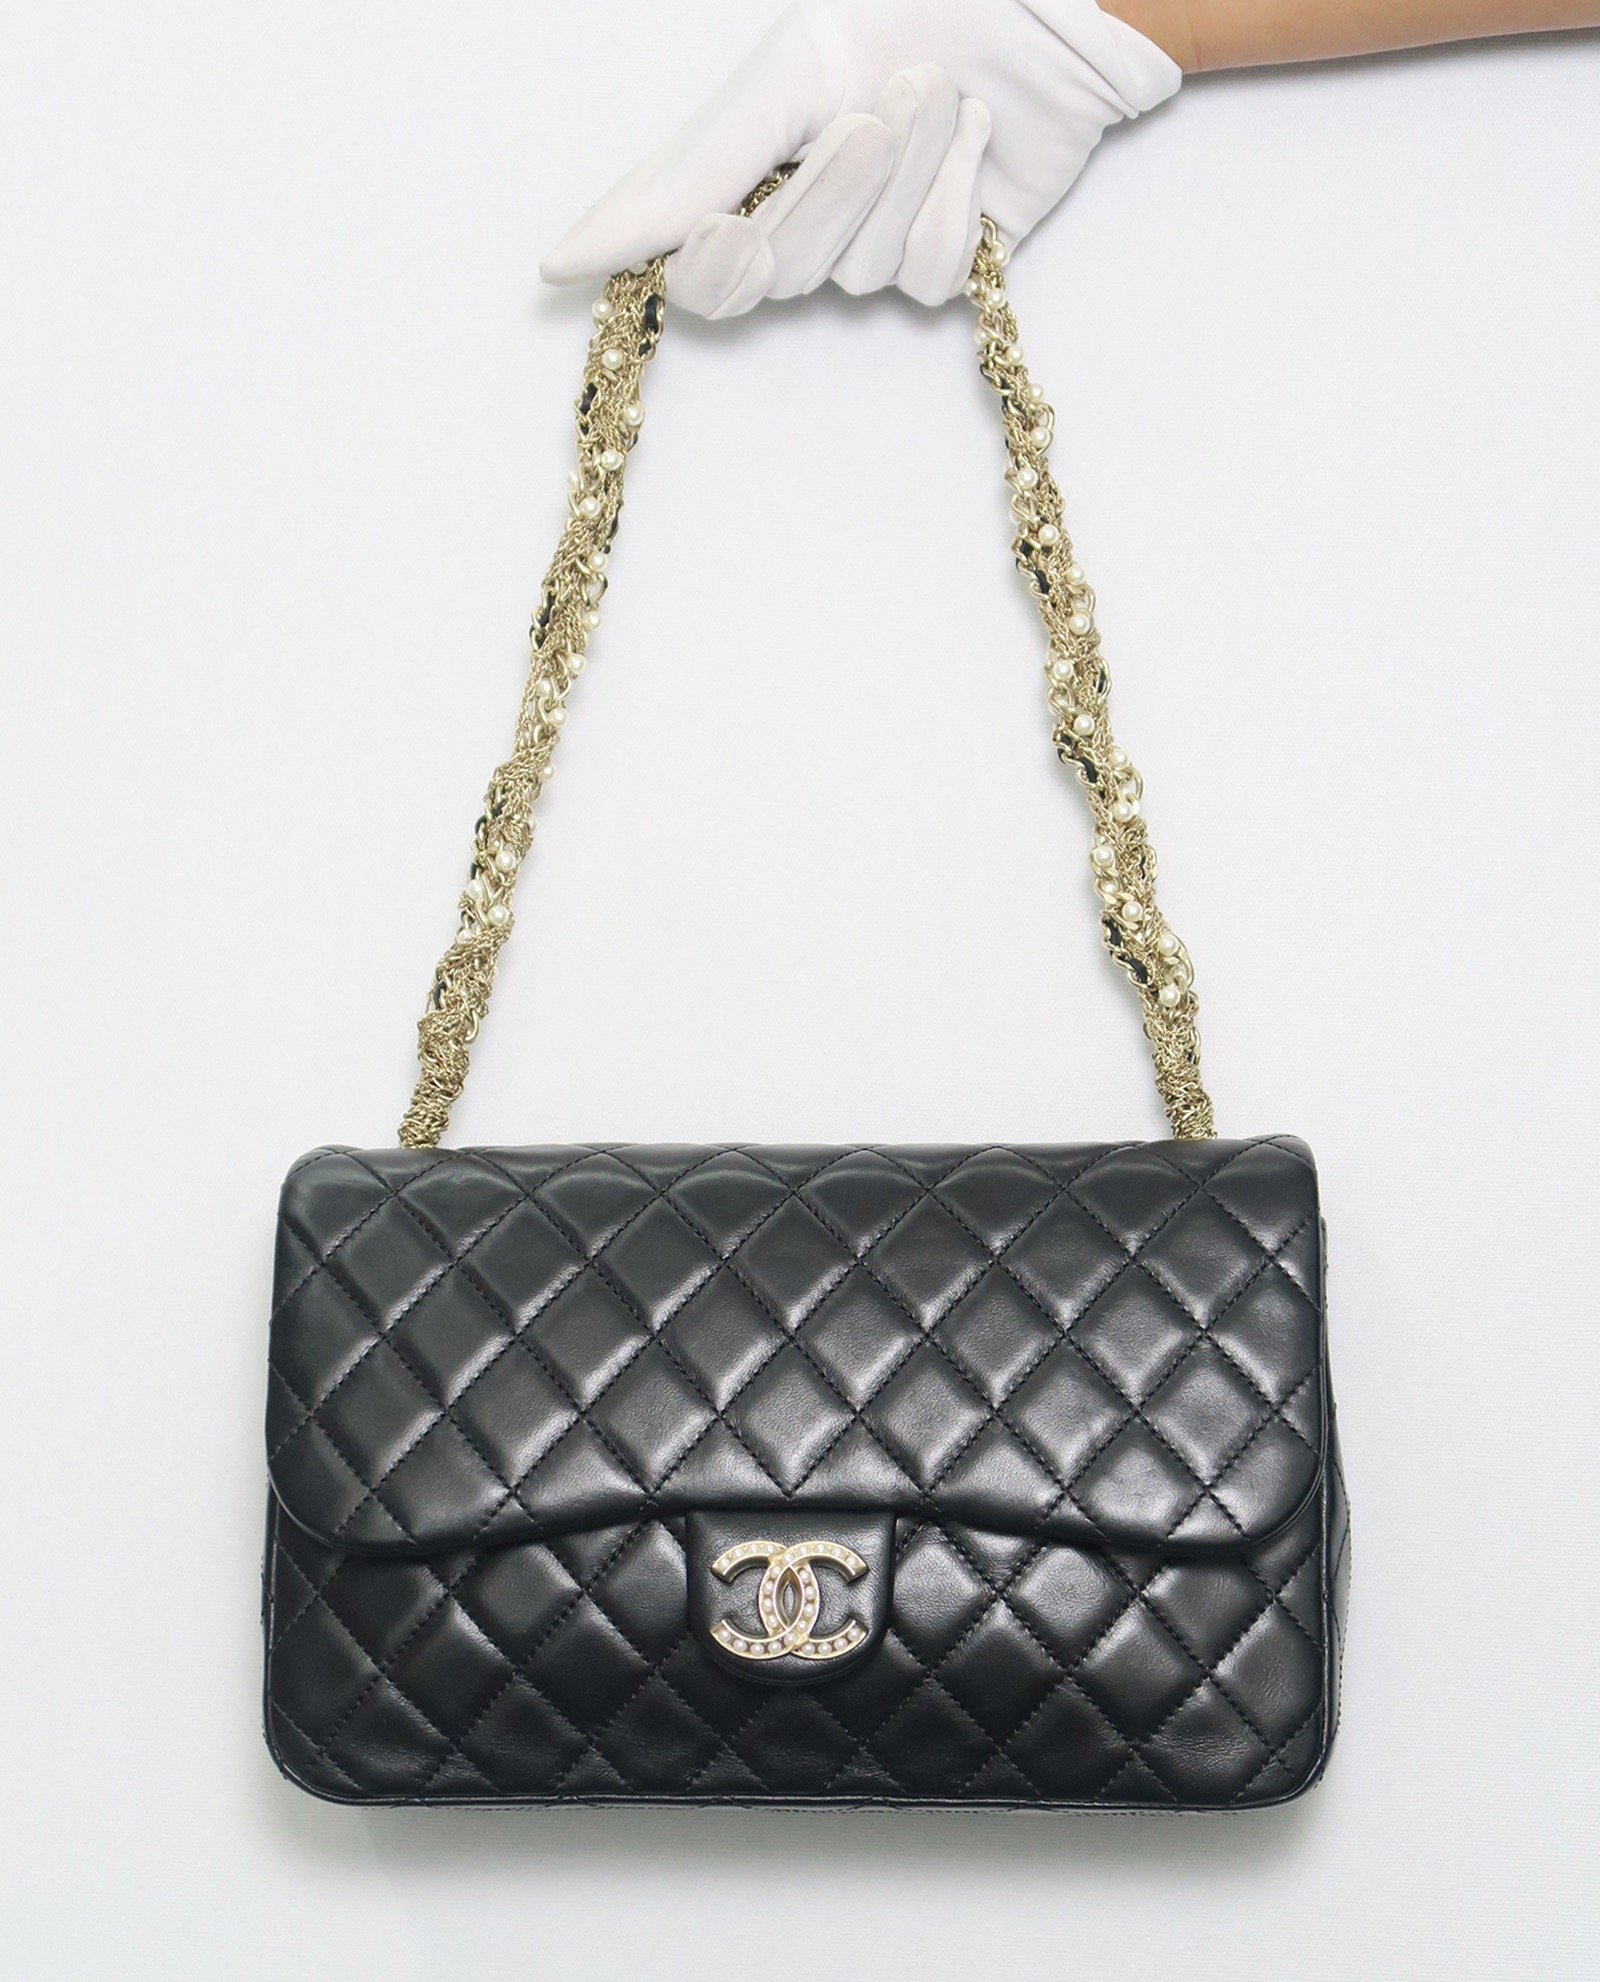 Westminster Flap Bag, Chanel - Designer Exchange | Sell Exchange